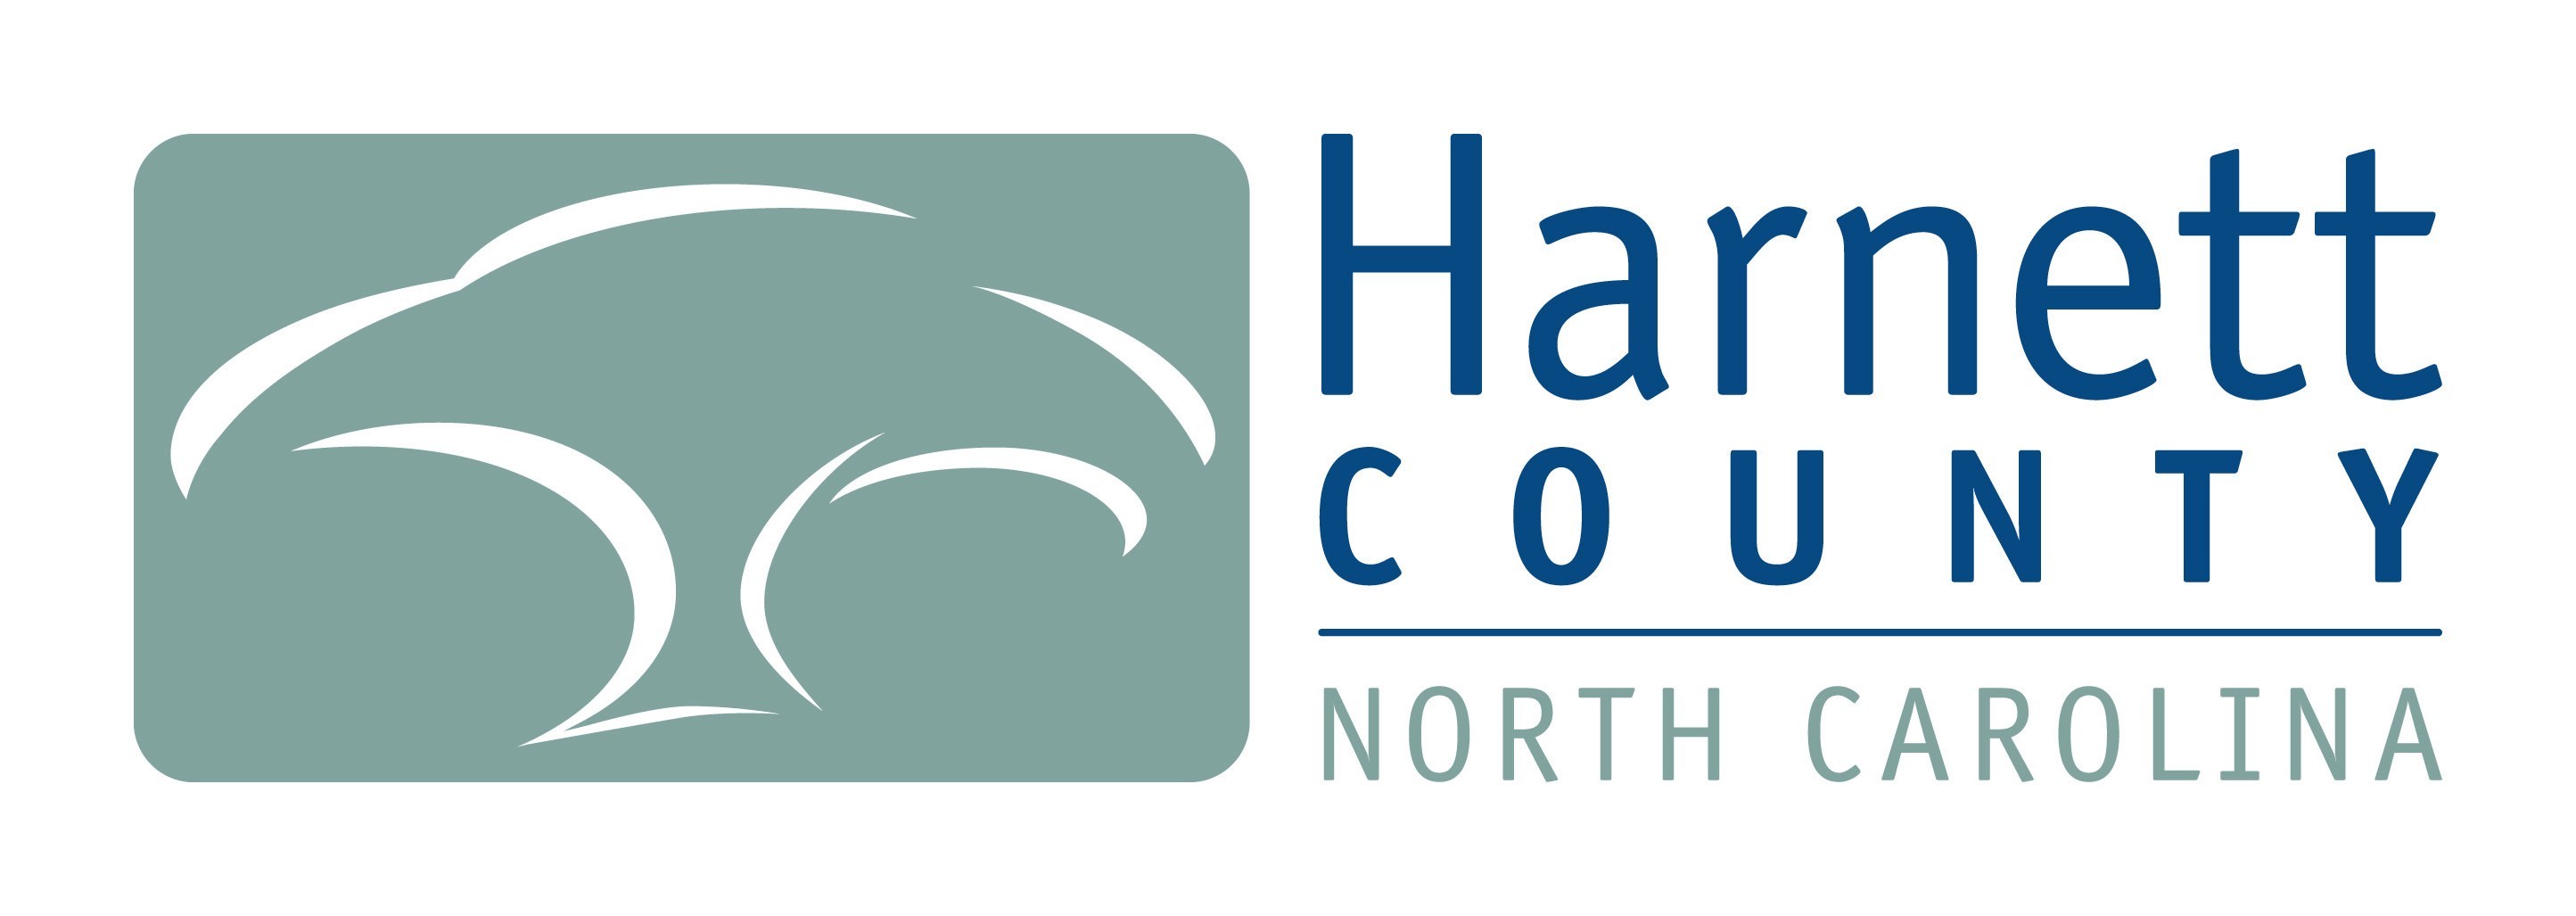 Harnett County Government